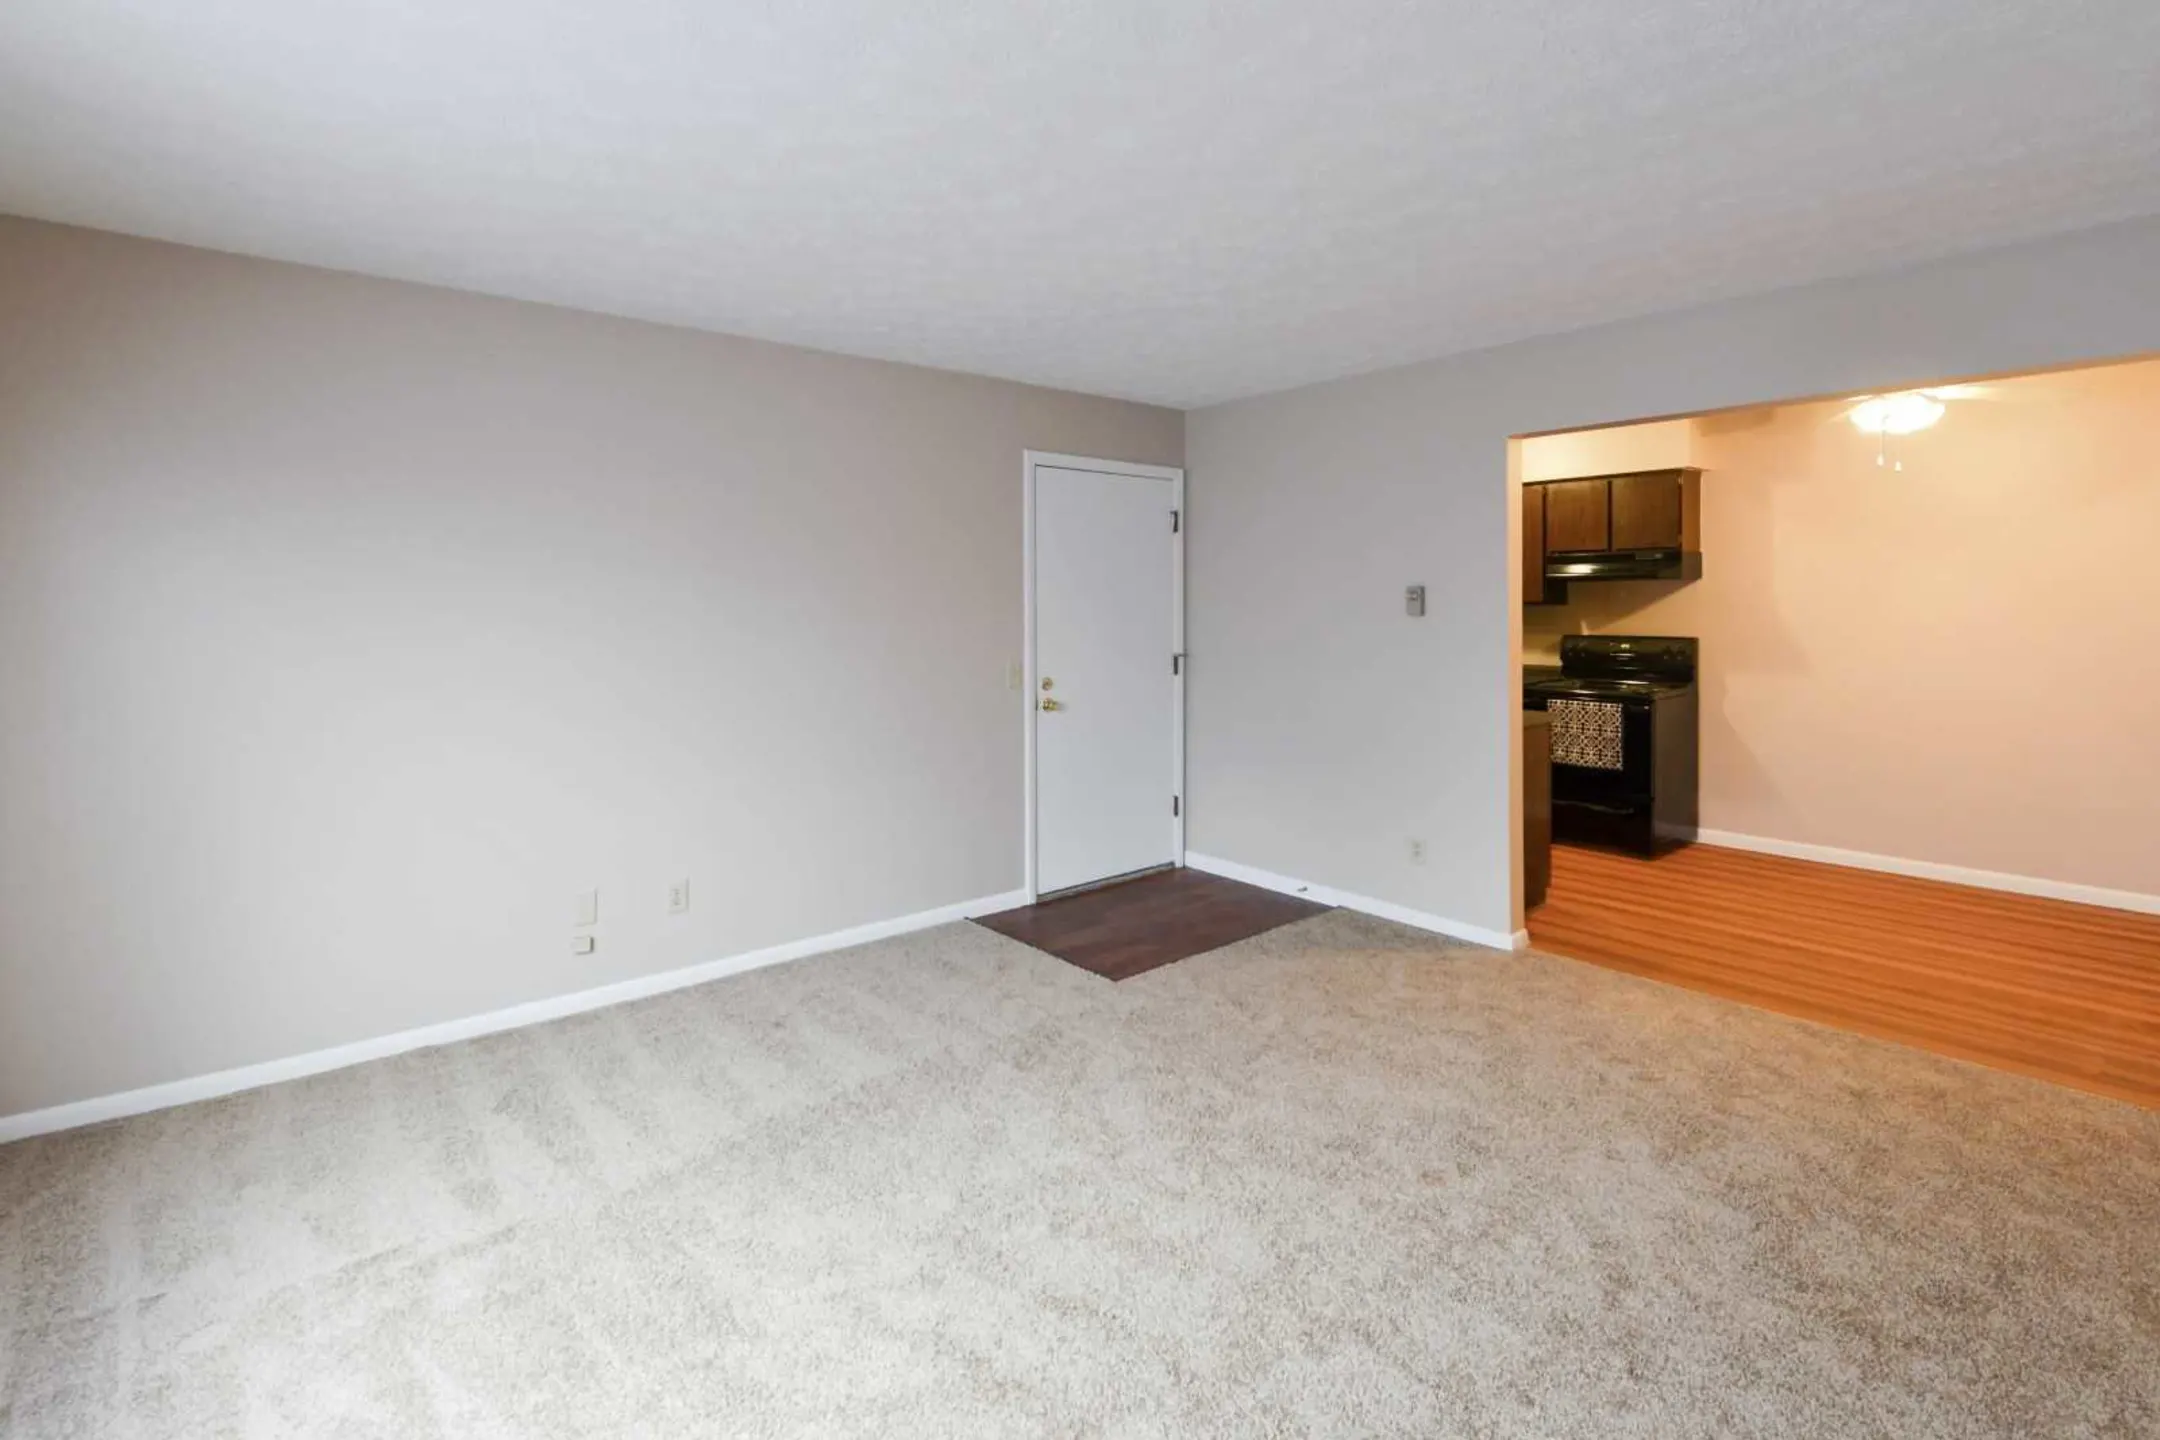 Living Room - Maple Wayview LLC - North Canton, OH